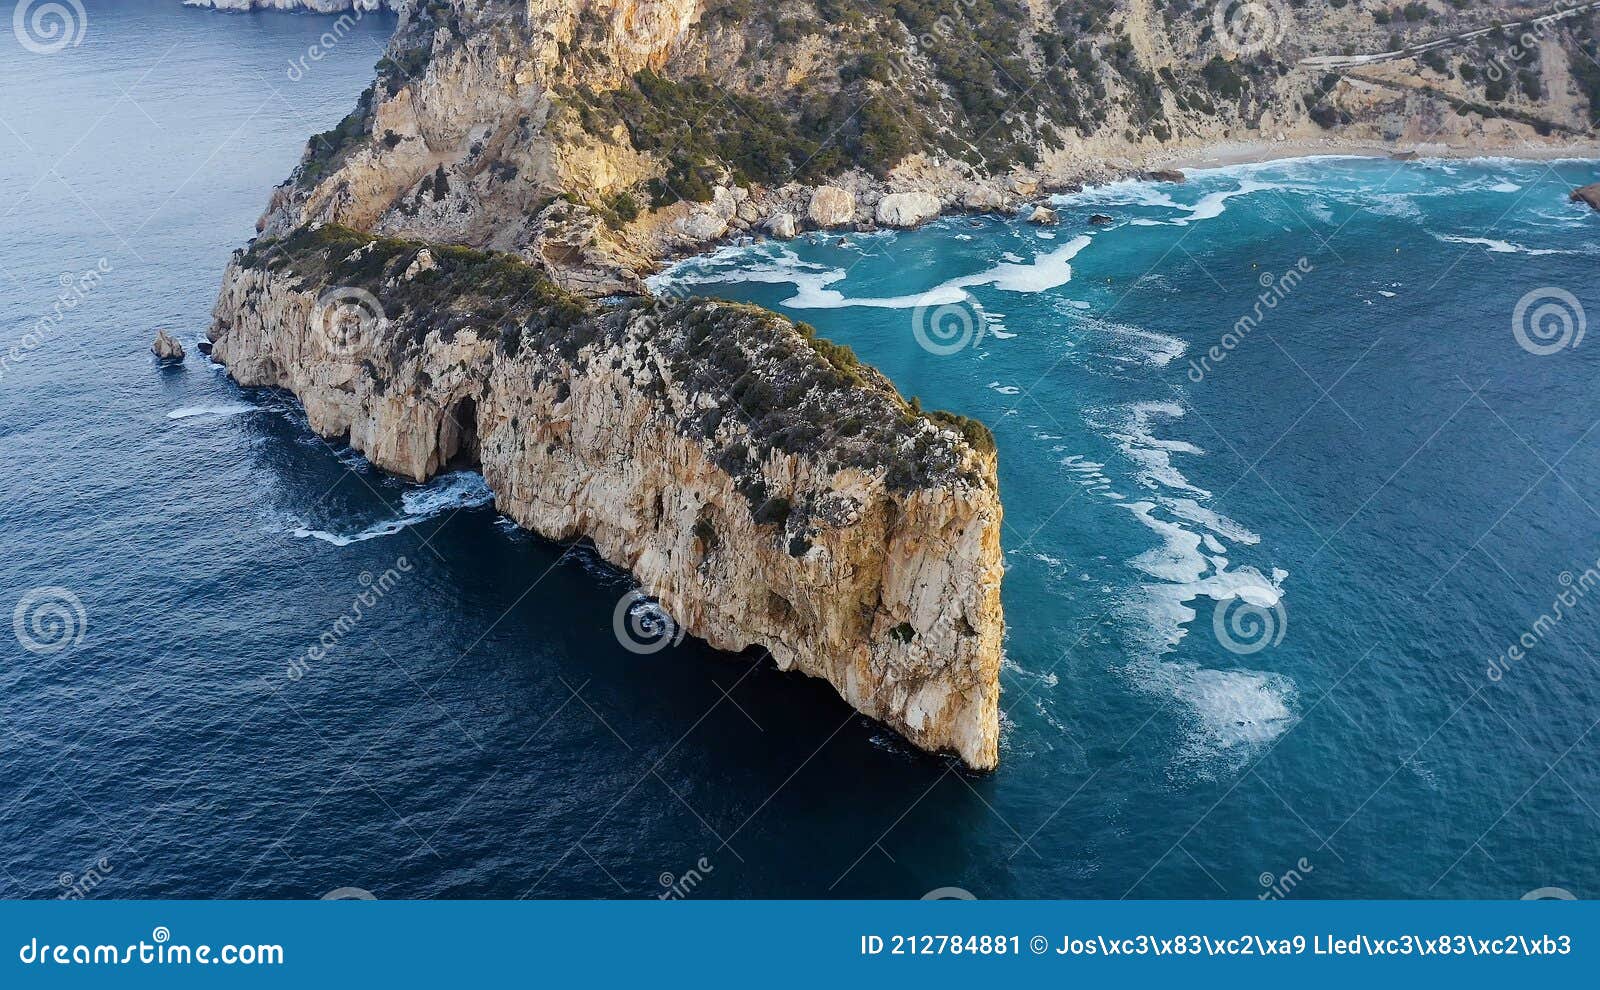 aerial view of islet descubridor in the coast of alicante, spain.